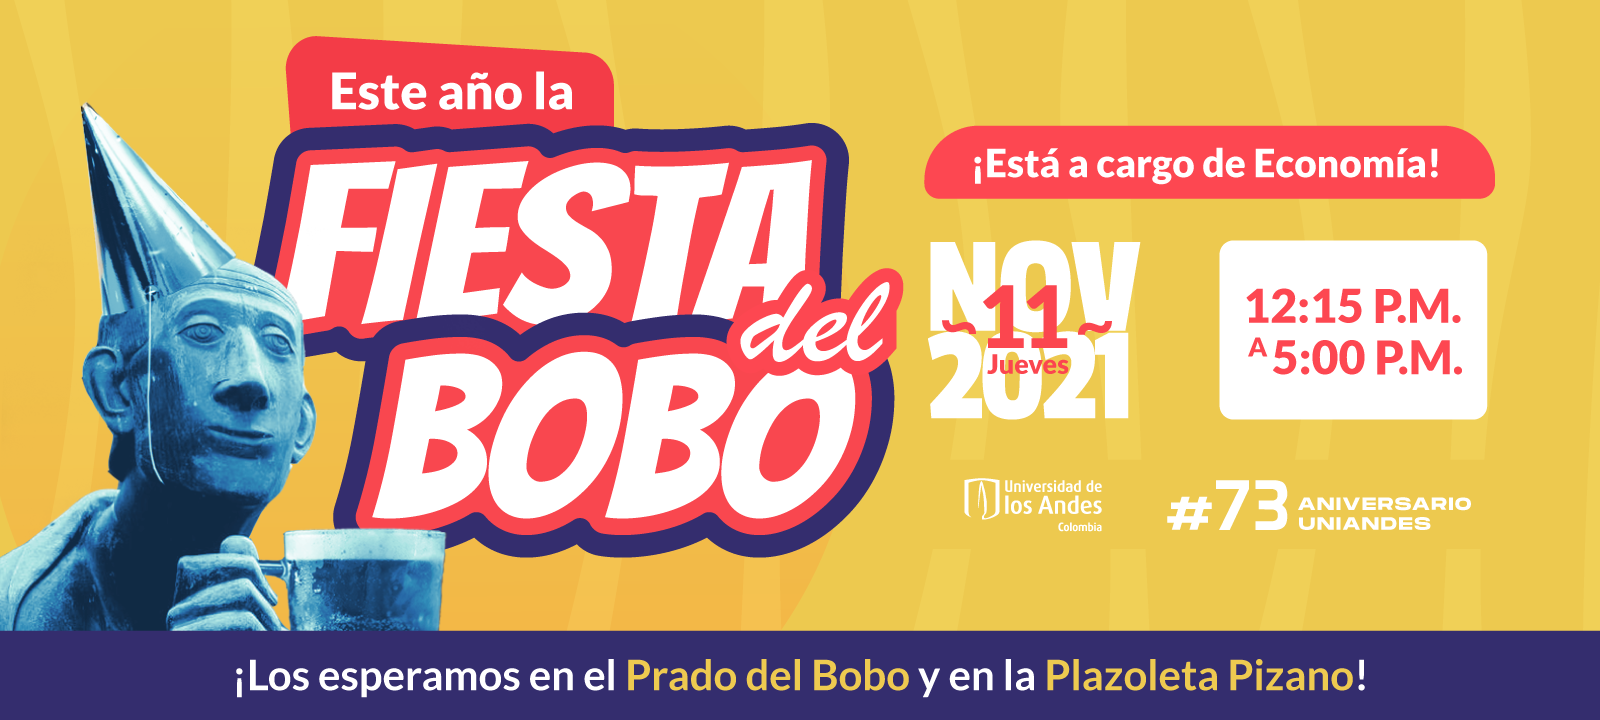 Bobo-fiesta-desktop.png